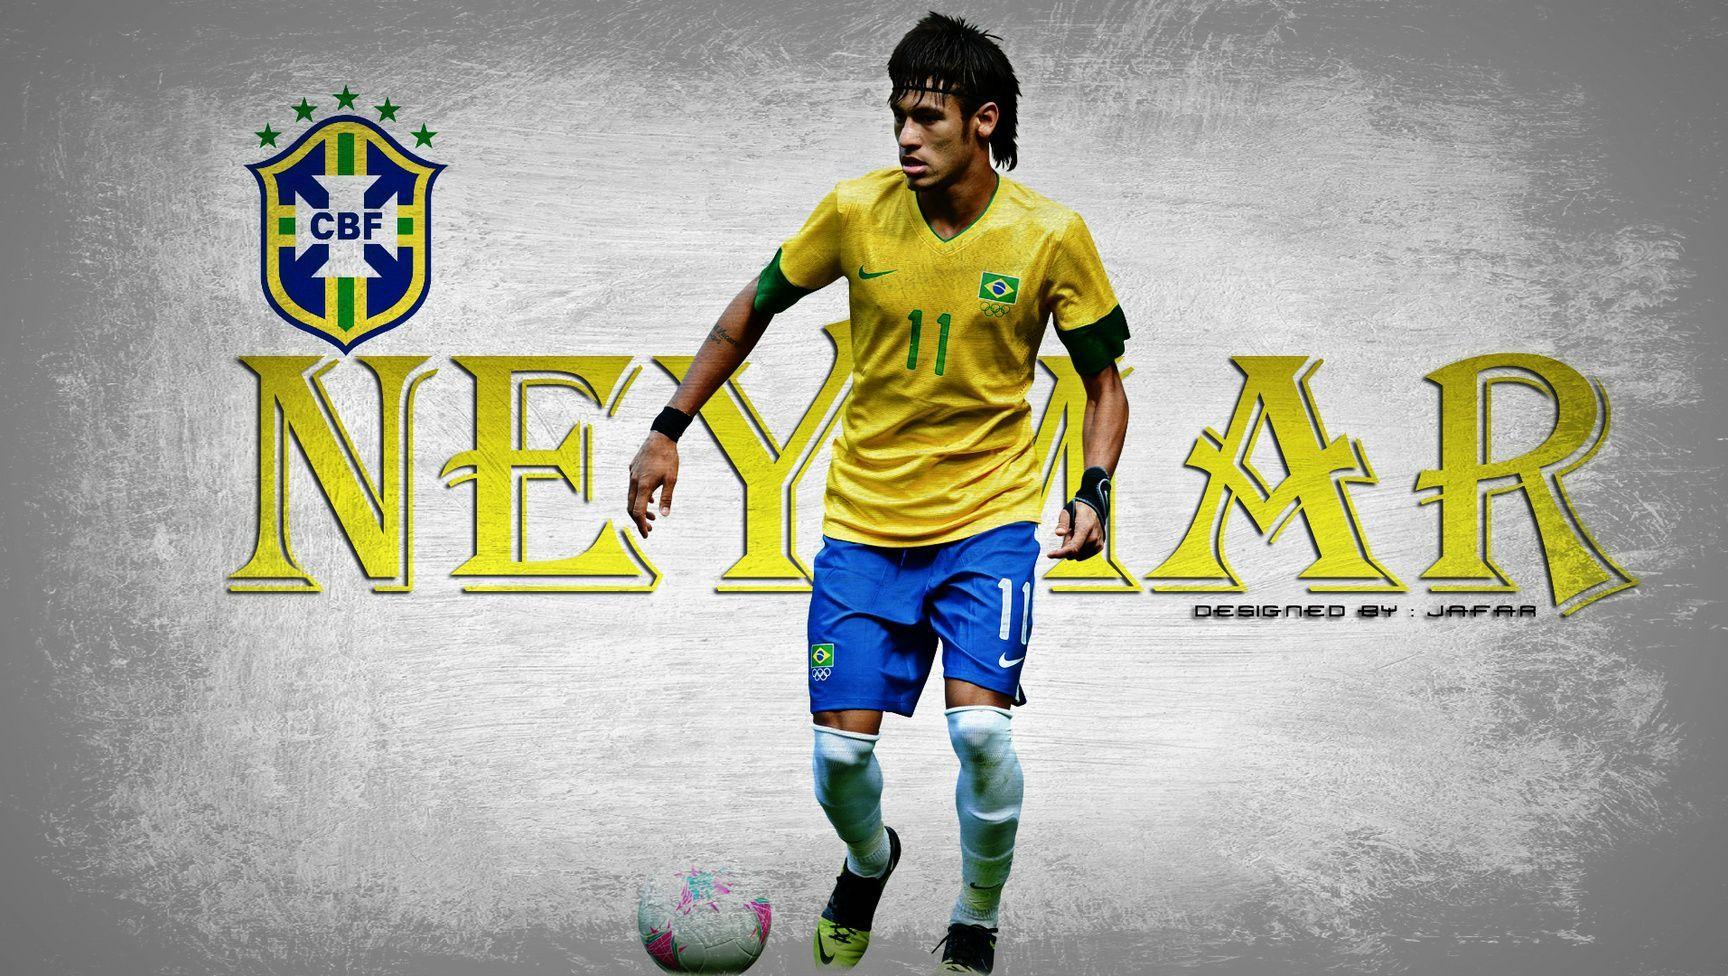 Neymar Wallpaper. Futbool Player Image. Player Wallpaper